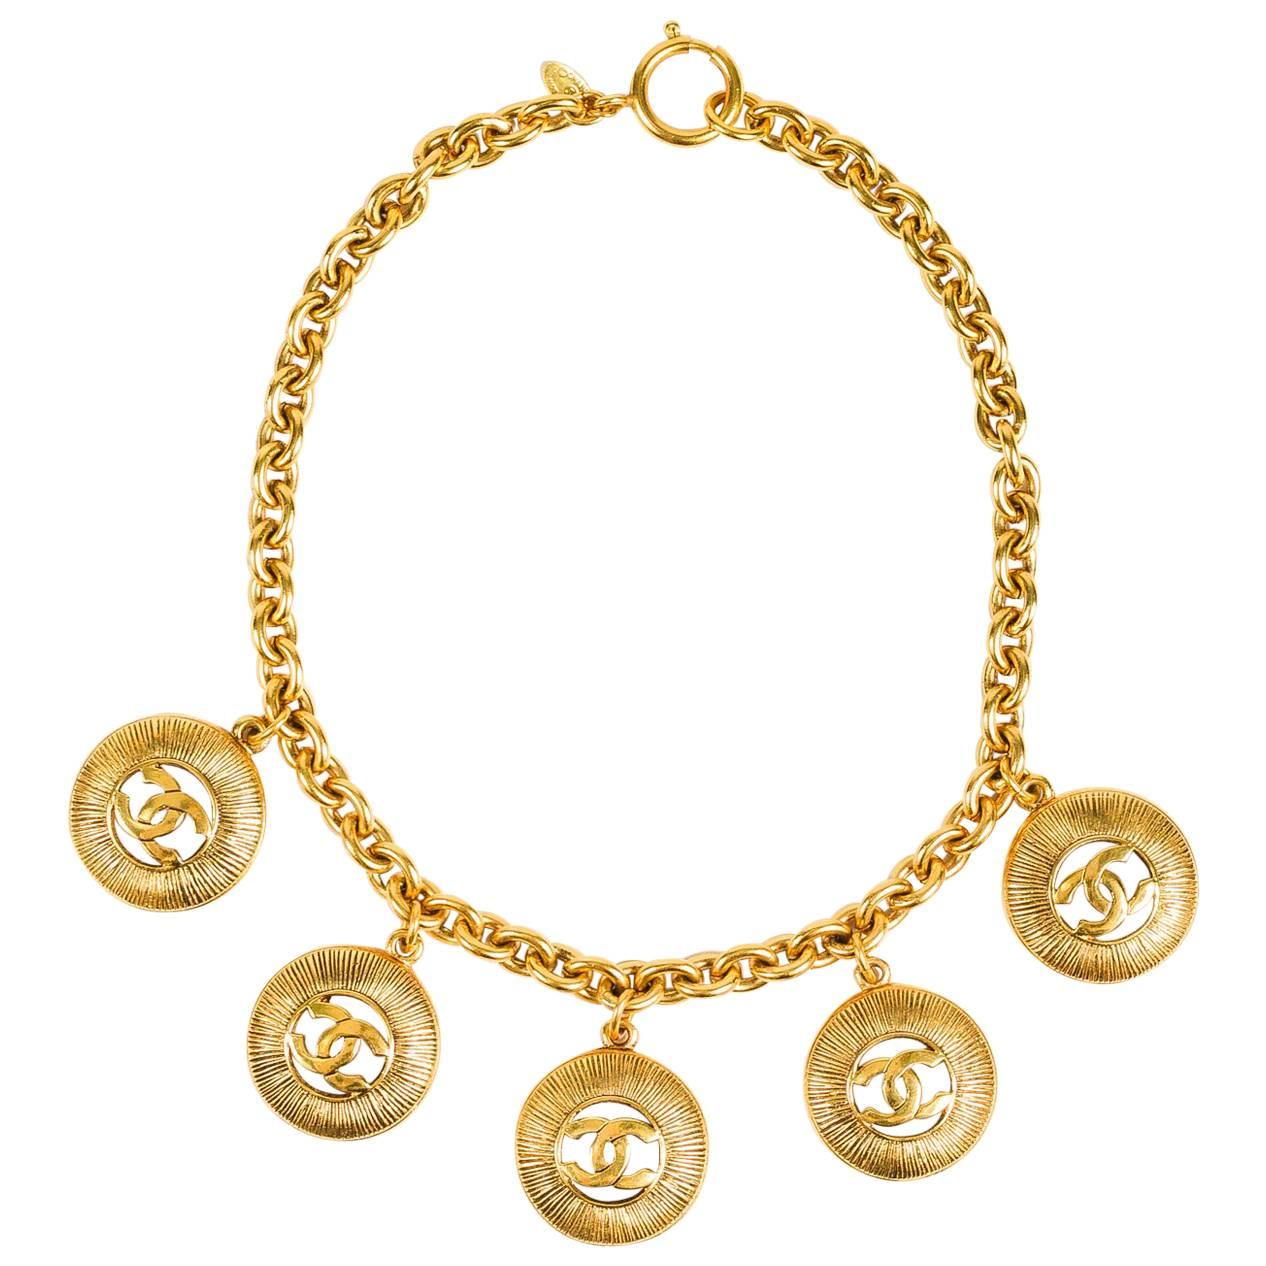 Vintage Chanel Gold Tone Etched 'CC' Medallion Charm Pedant Necklace